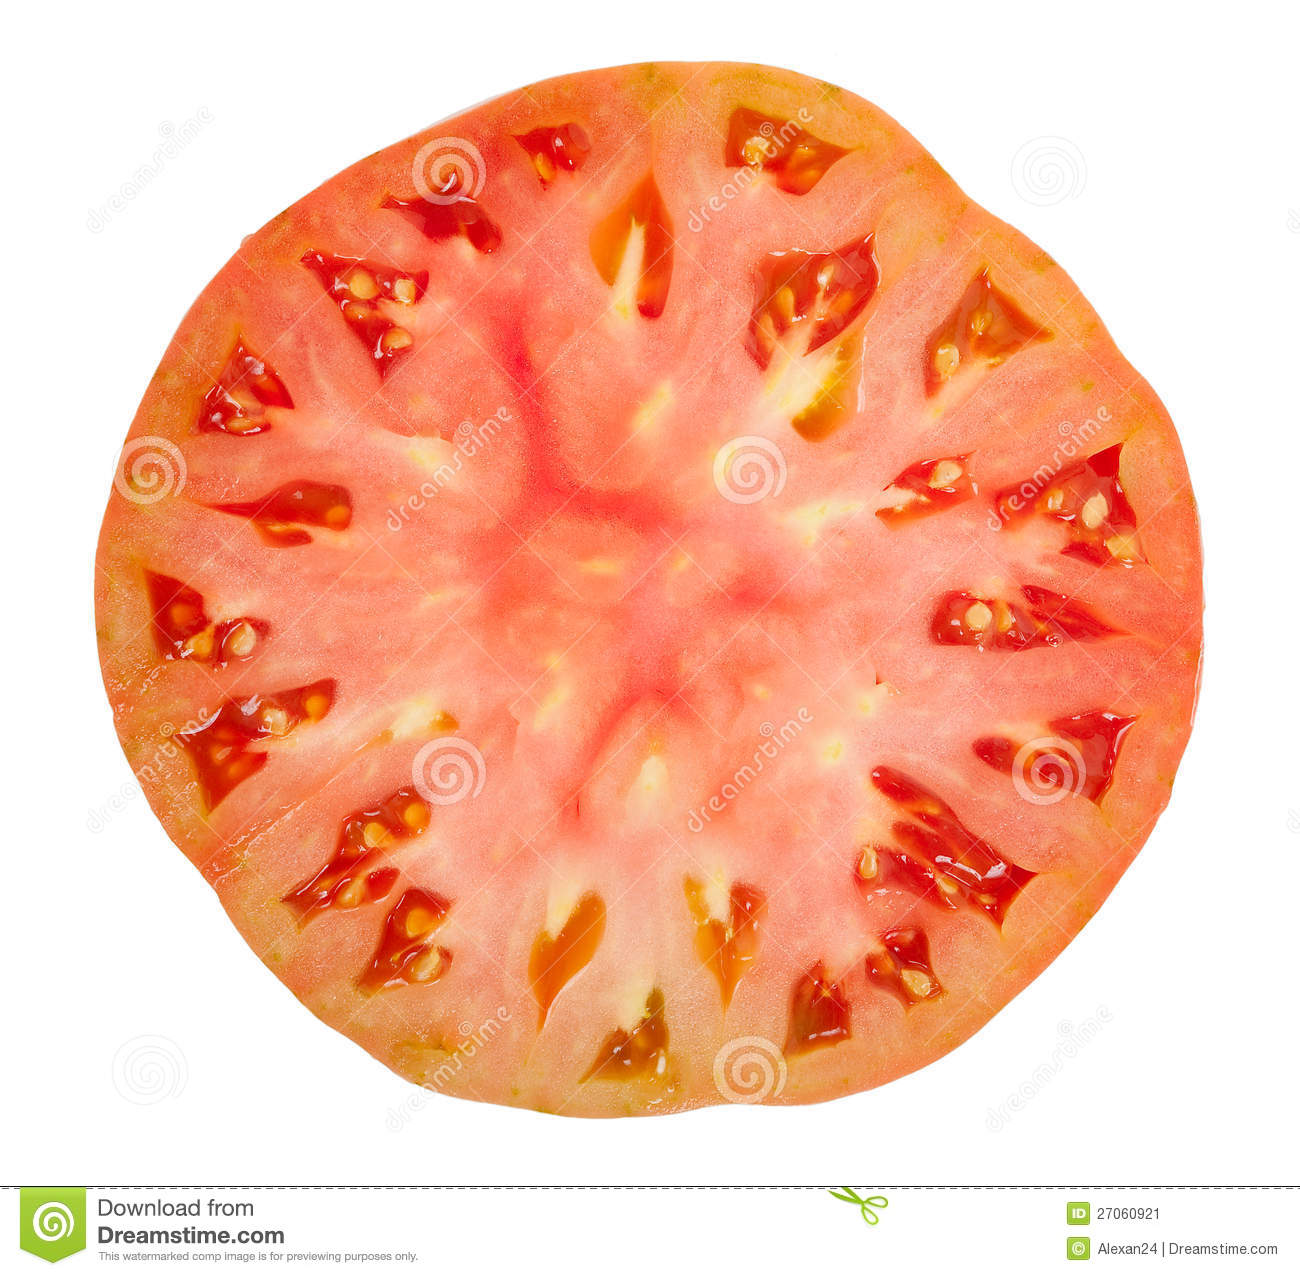 Tomato Slice Stock Image   Image  27060921